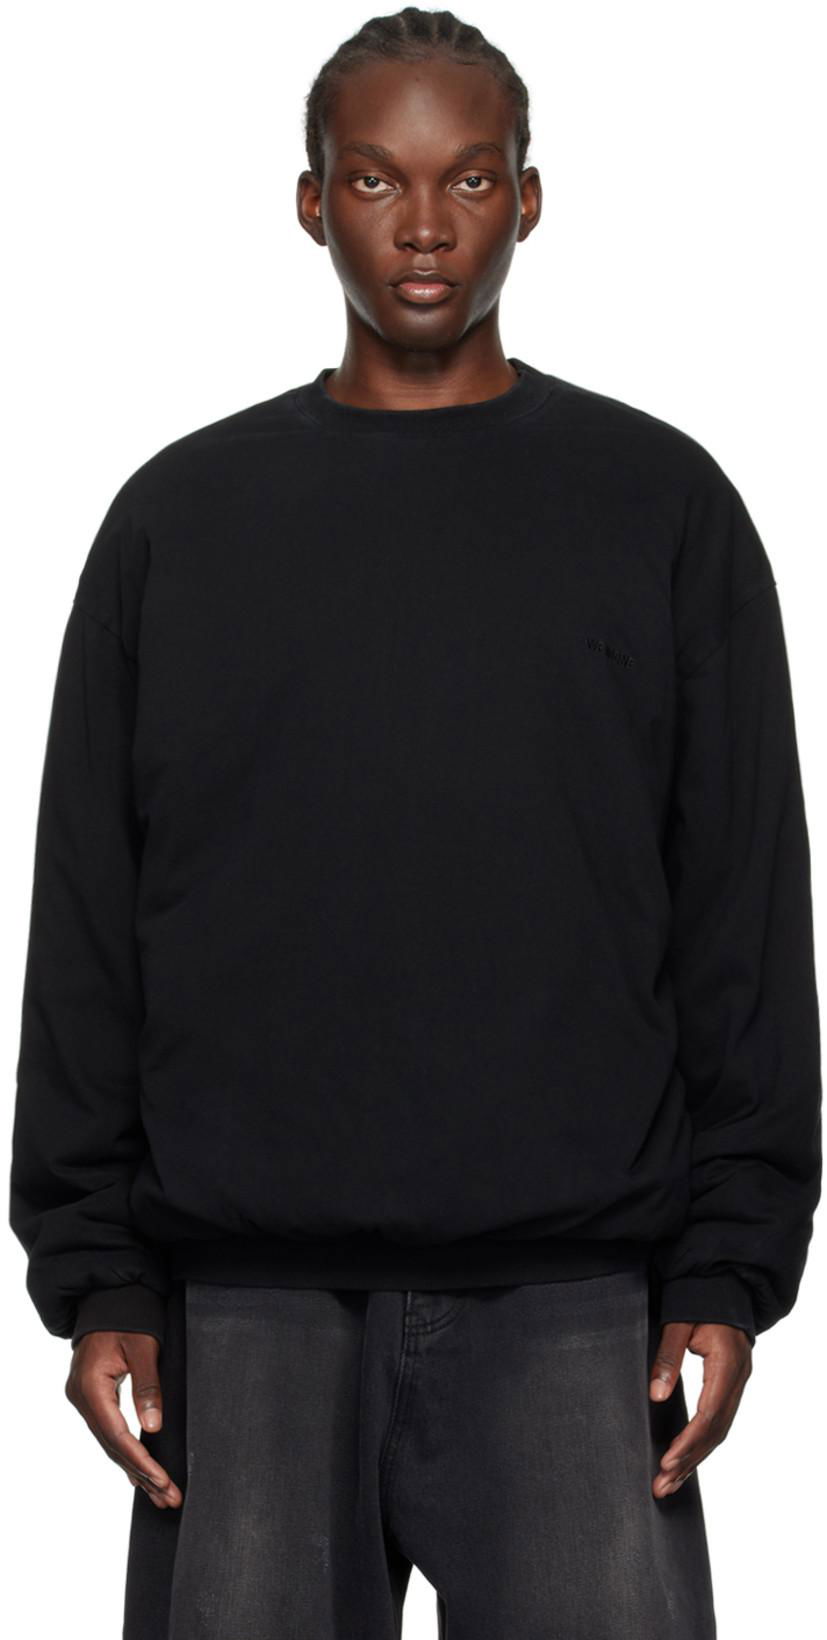 Black Padded Sweatshirt by WE11DONE